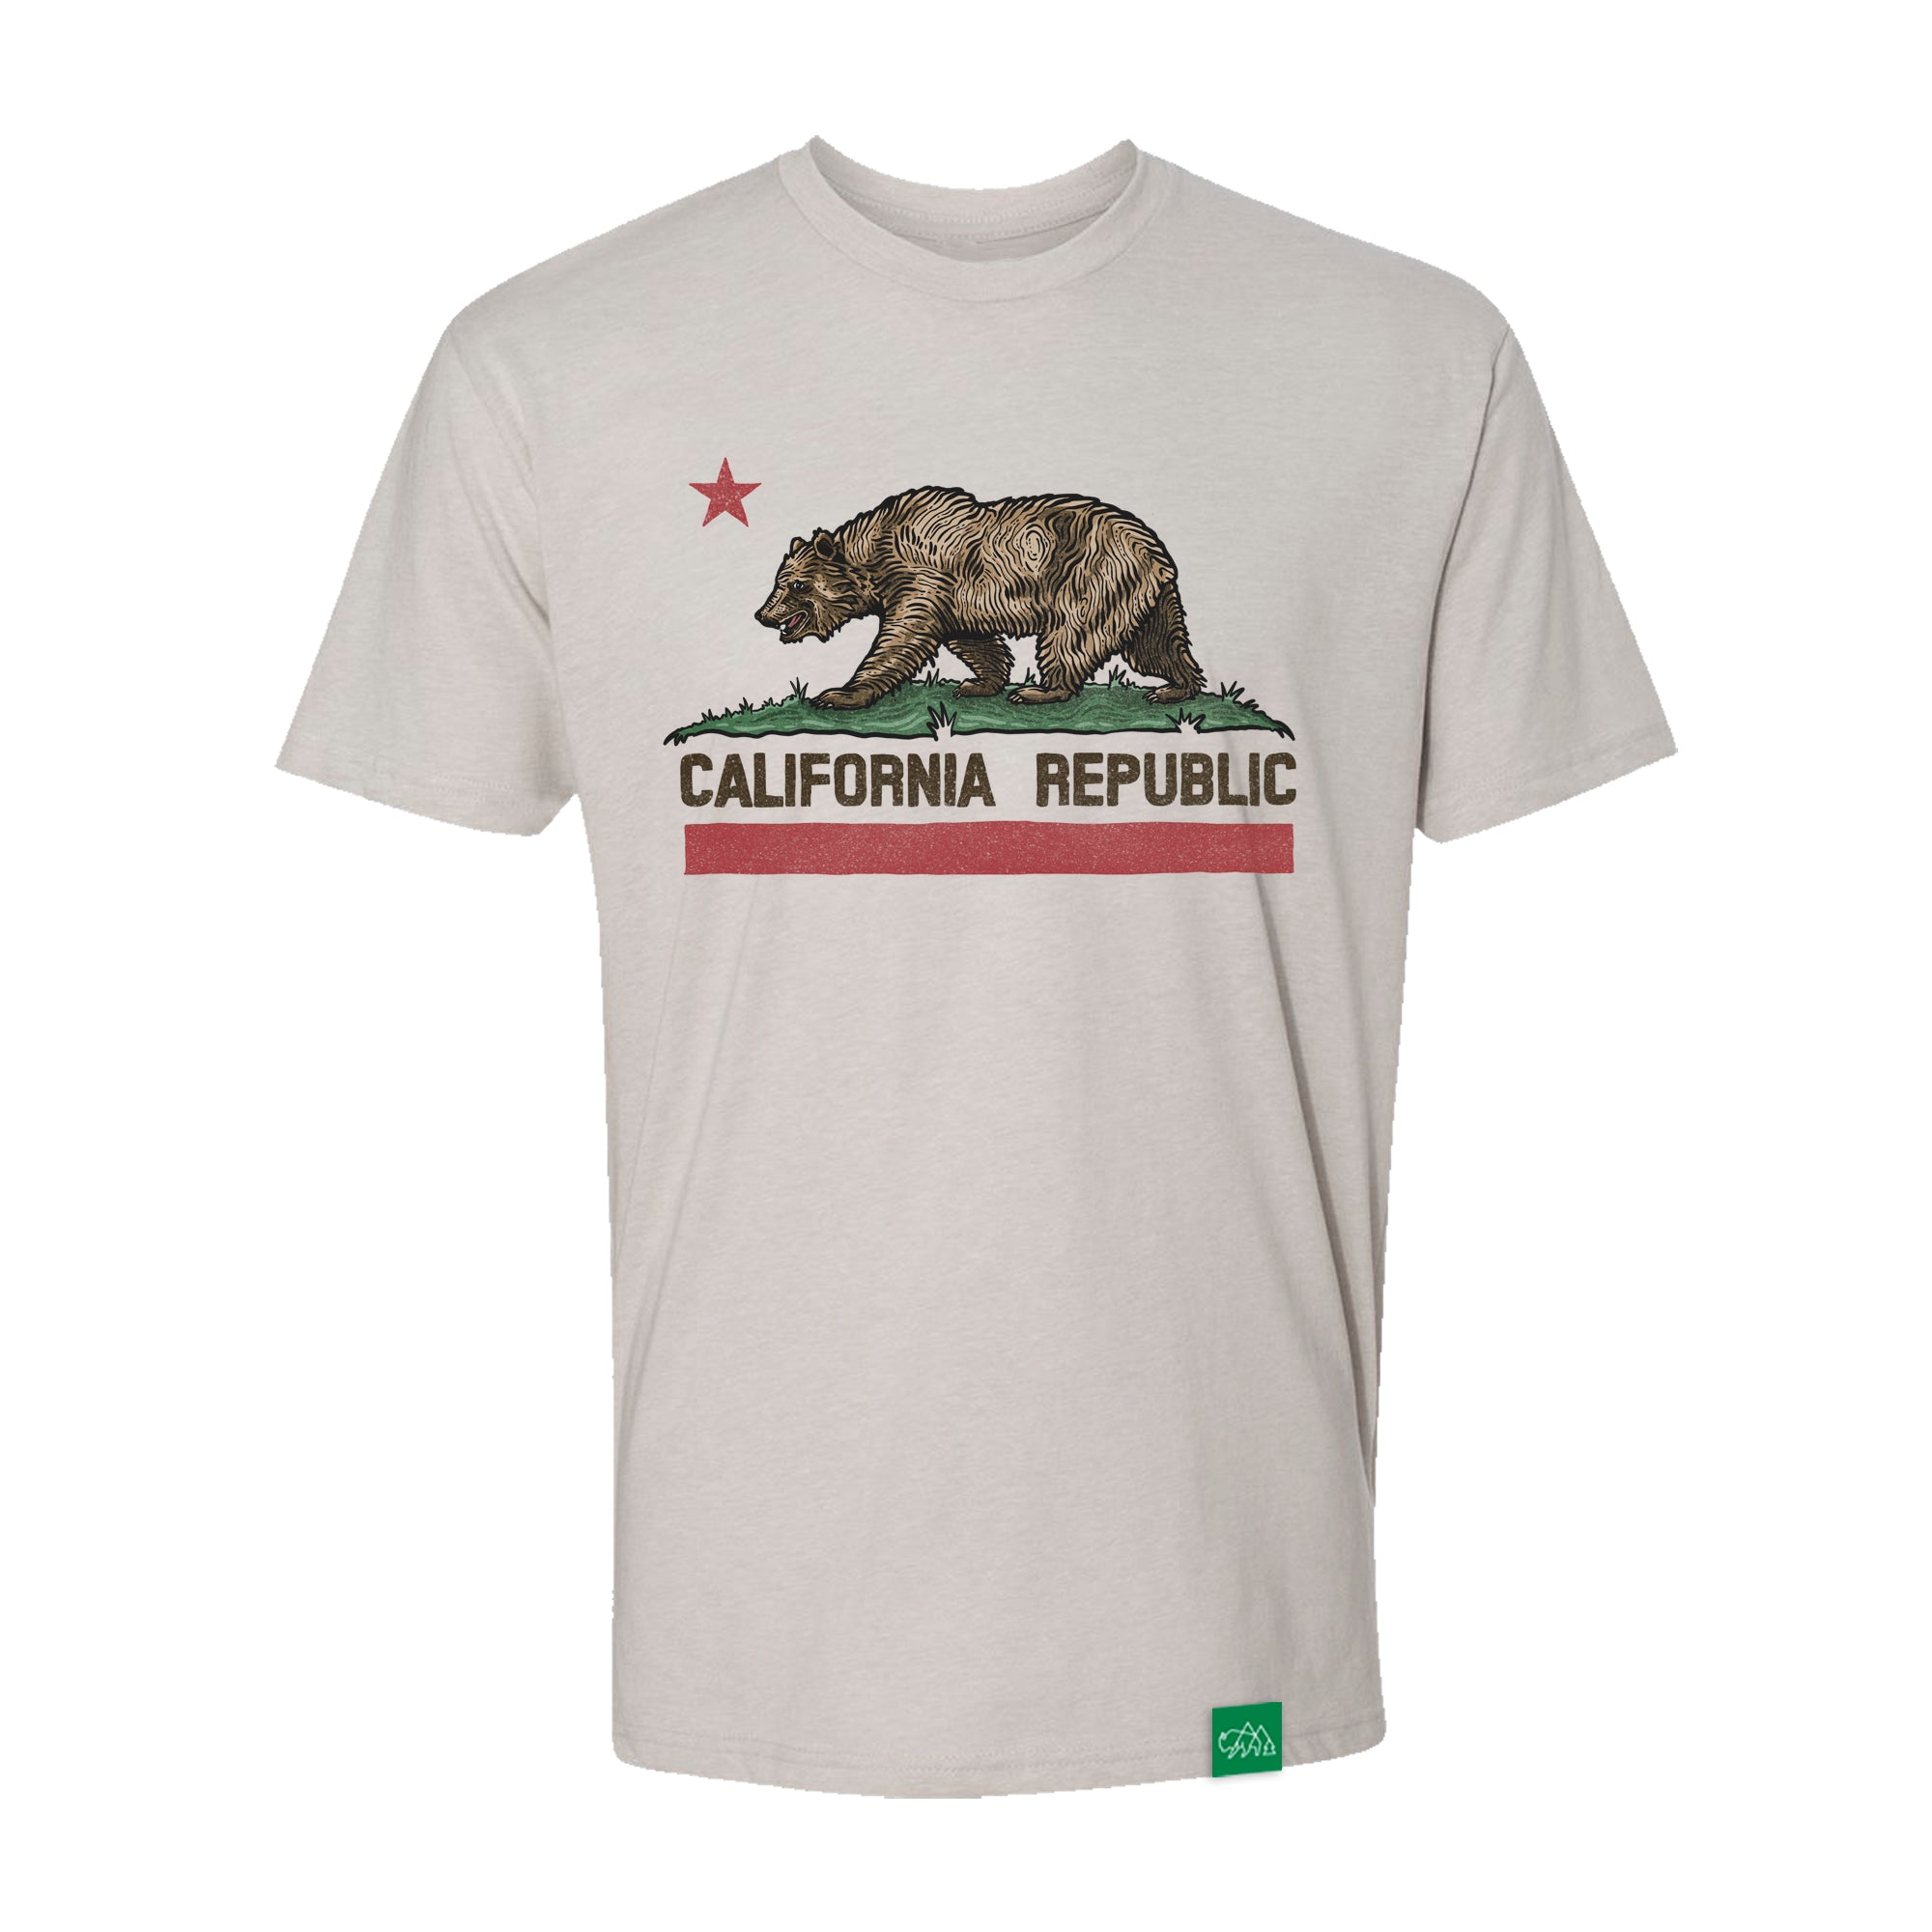 Republic of California T-Shirt Tee Wild Tribute